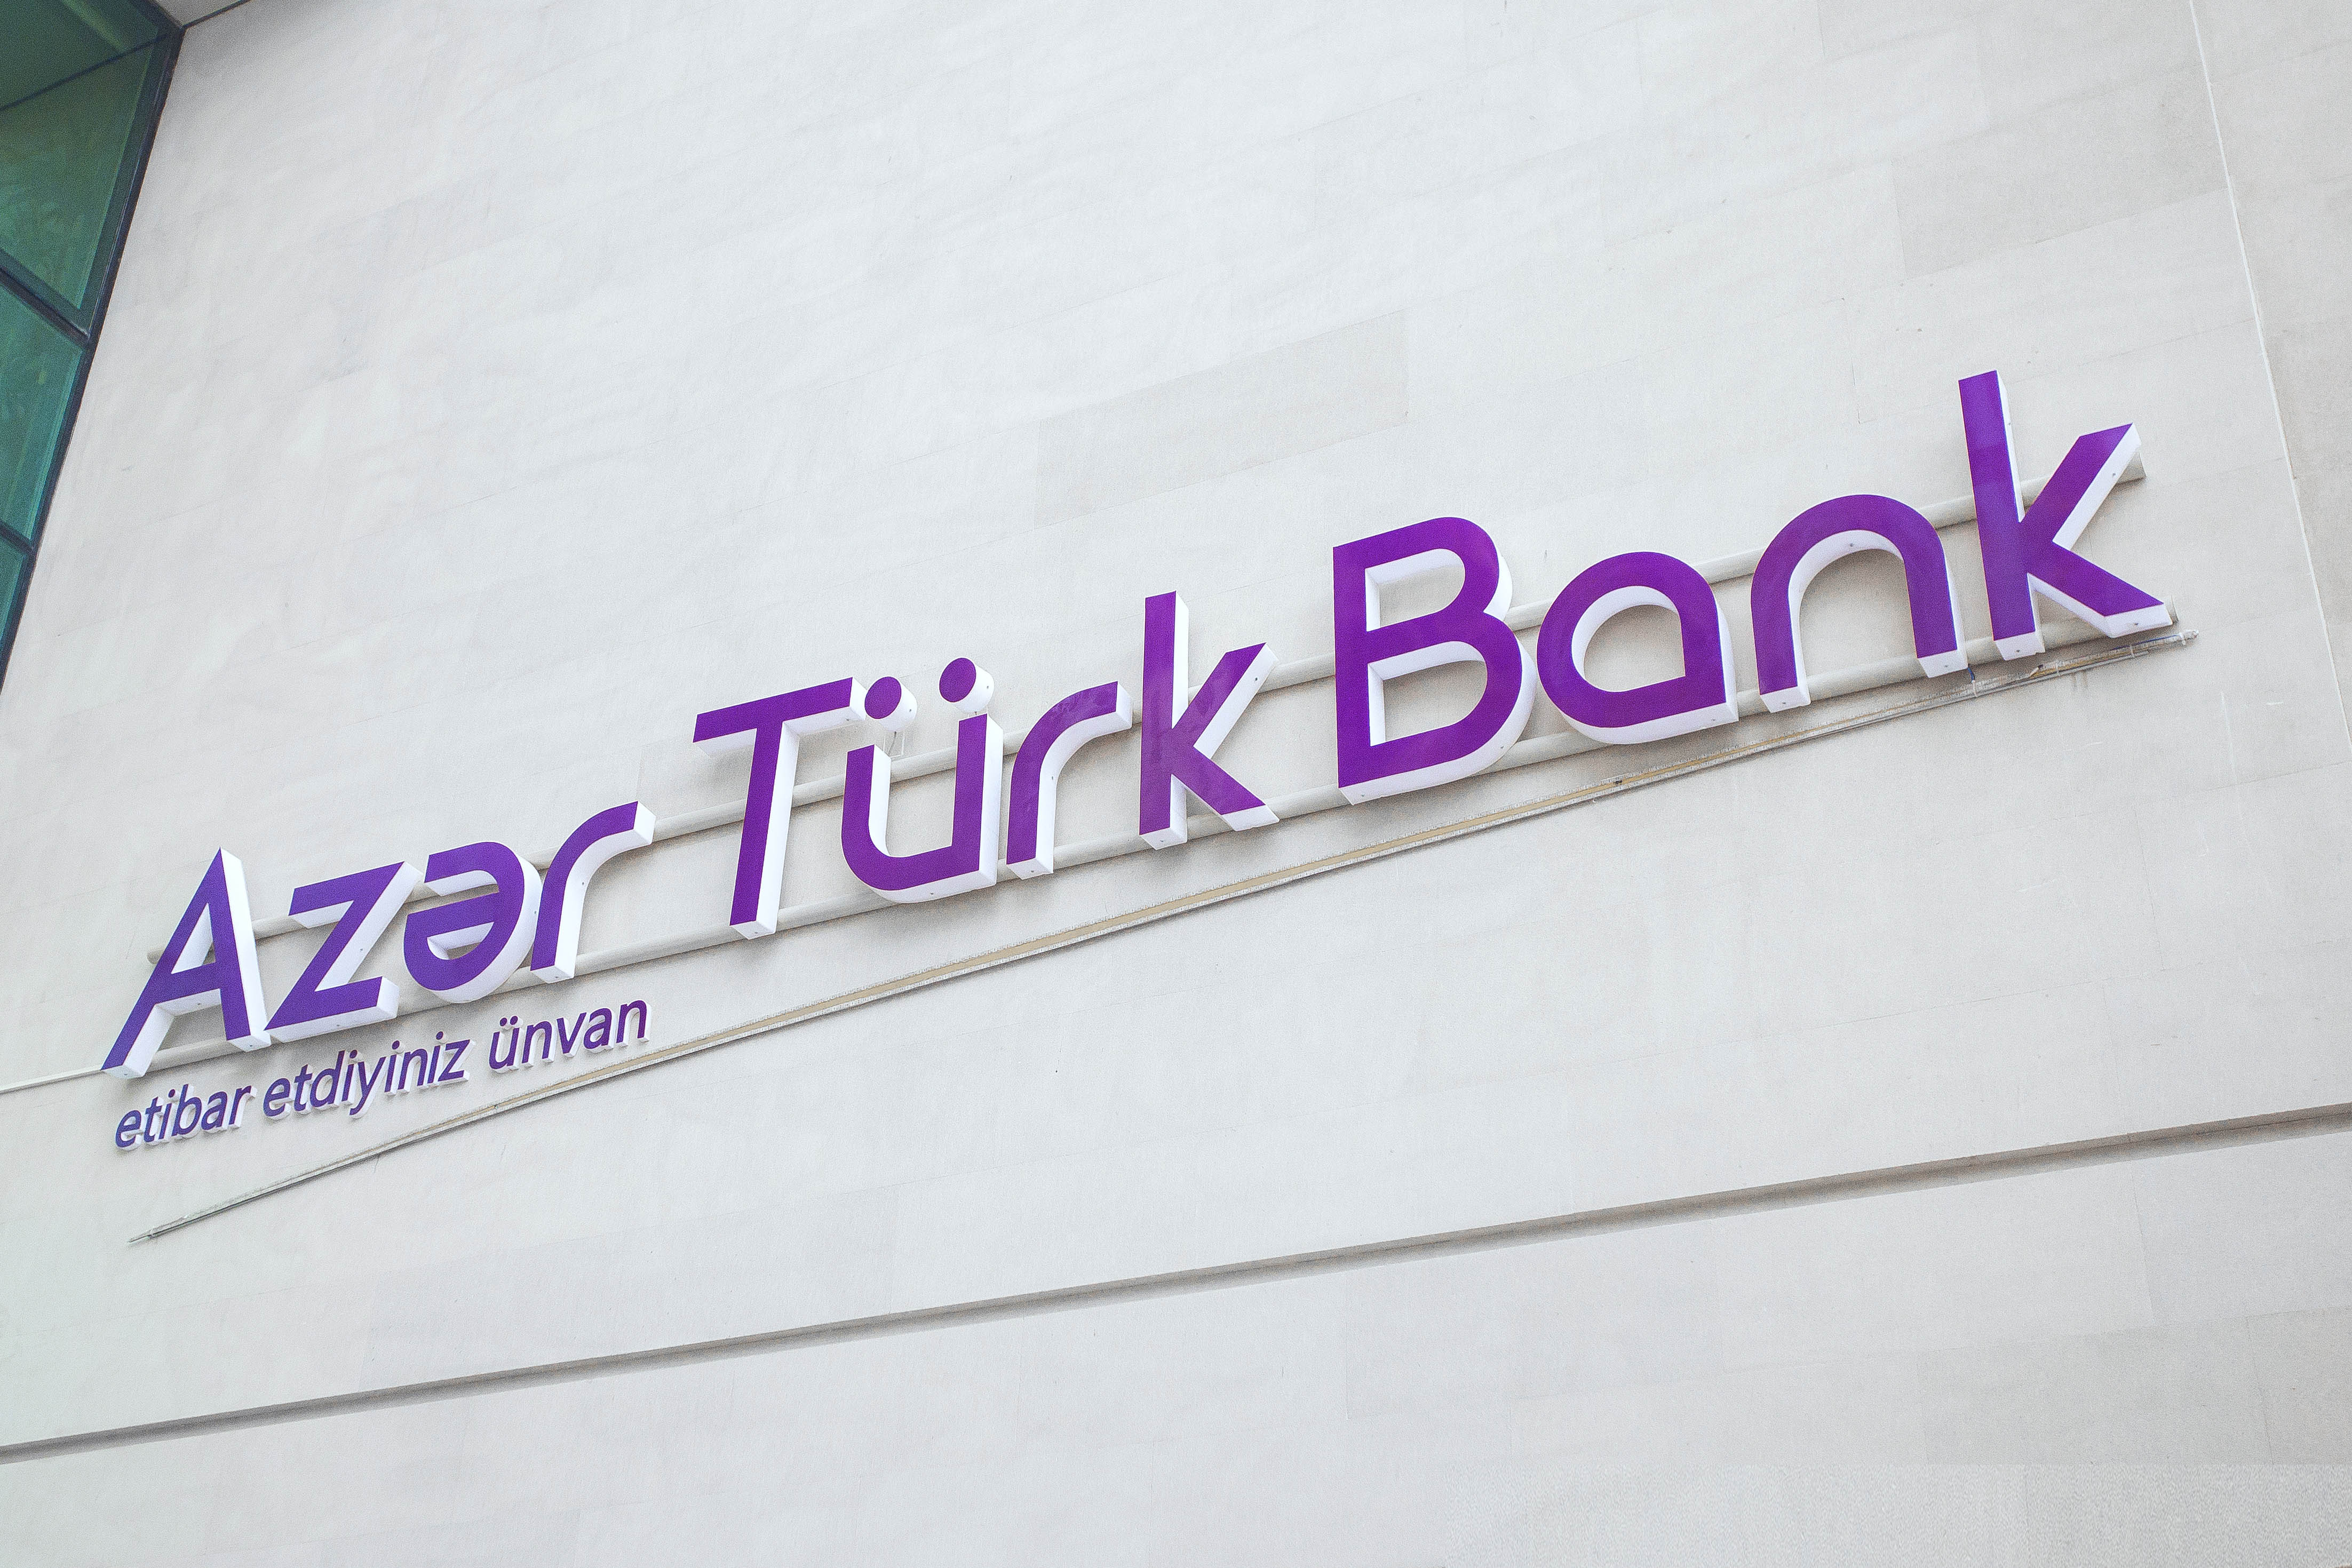 Azər Türk Bank завершил процесс миграции на процессинговый центр AzeriCard